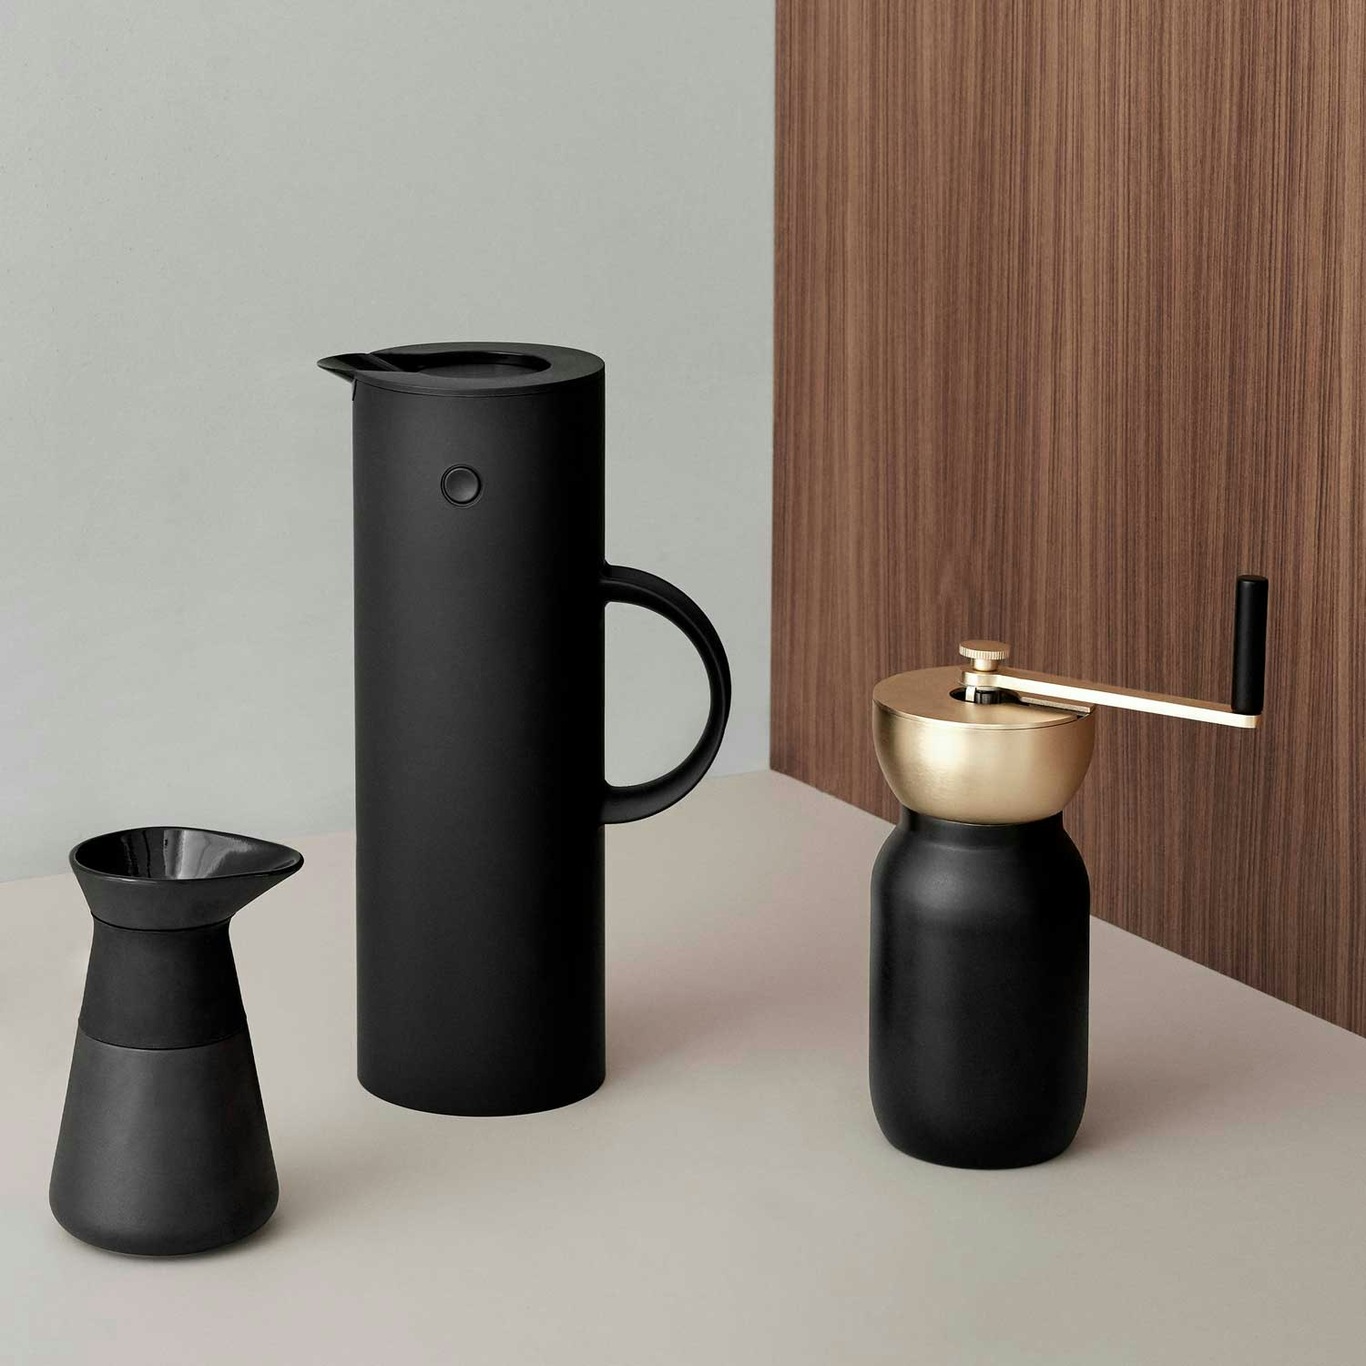 https://royaldesign.com/image/2/stelton-em77-classic-thermos-jug-1-l-soft-black-0?w=800&quality=80